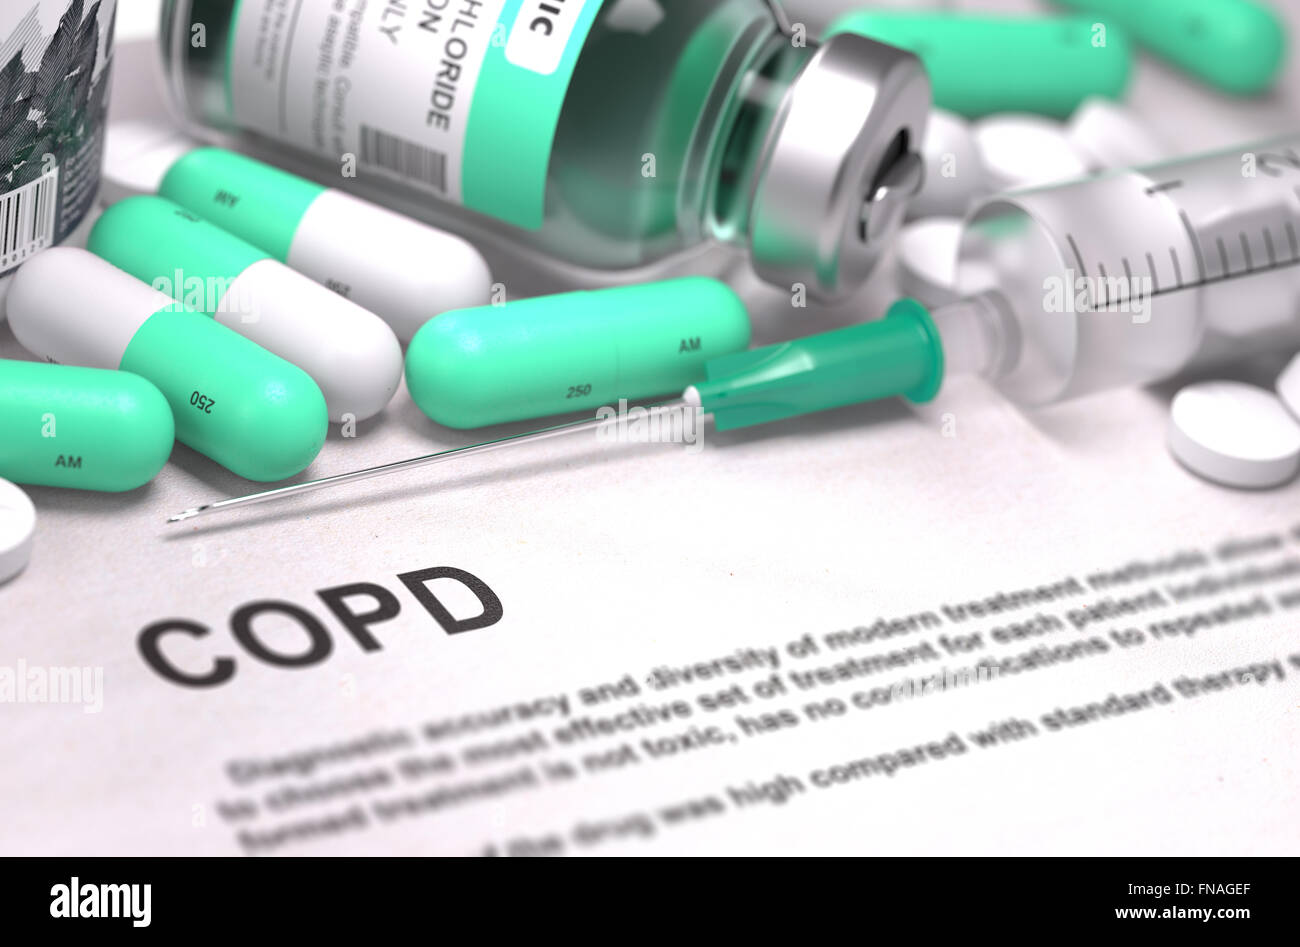 Sticking to Your Plan: Top Medication Adherence Strategies for COPD (COPD Medication Adherence)